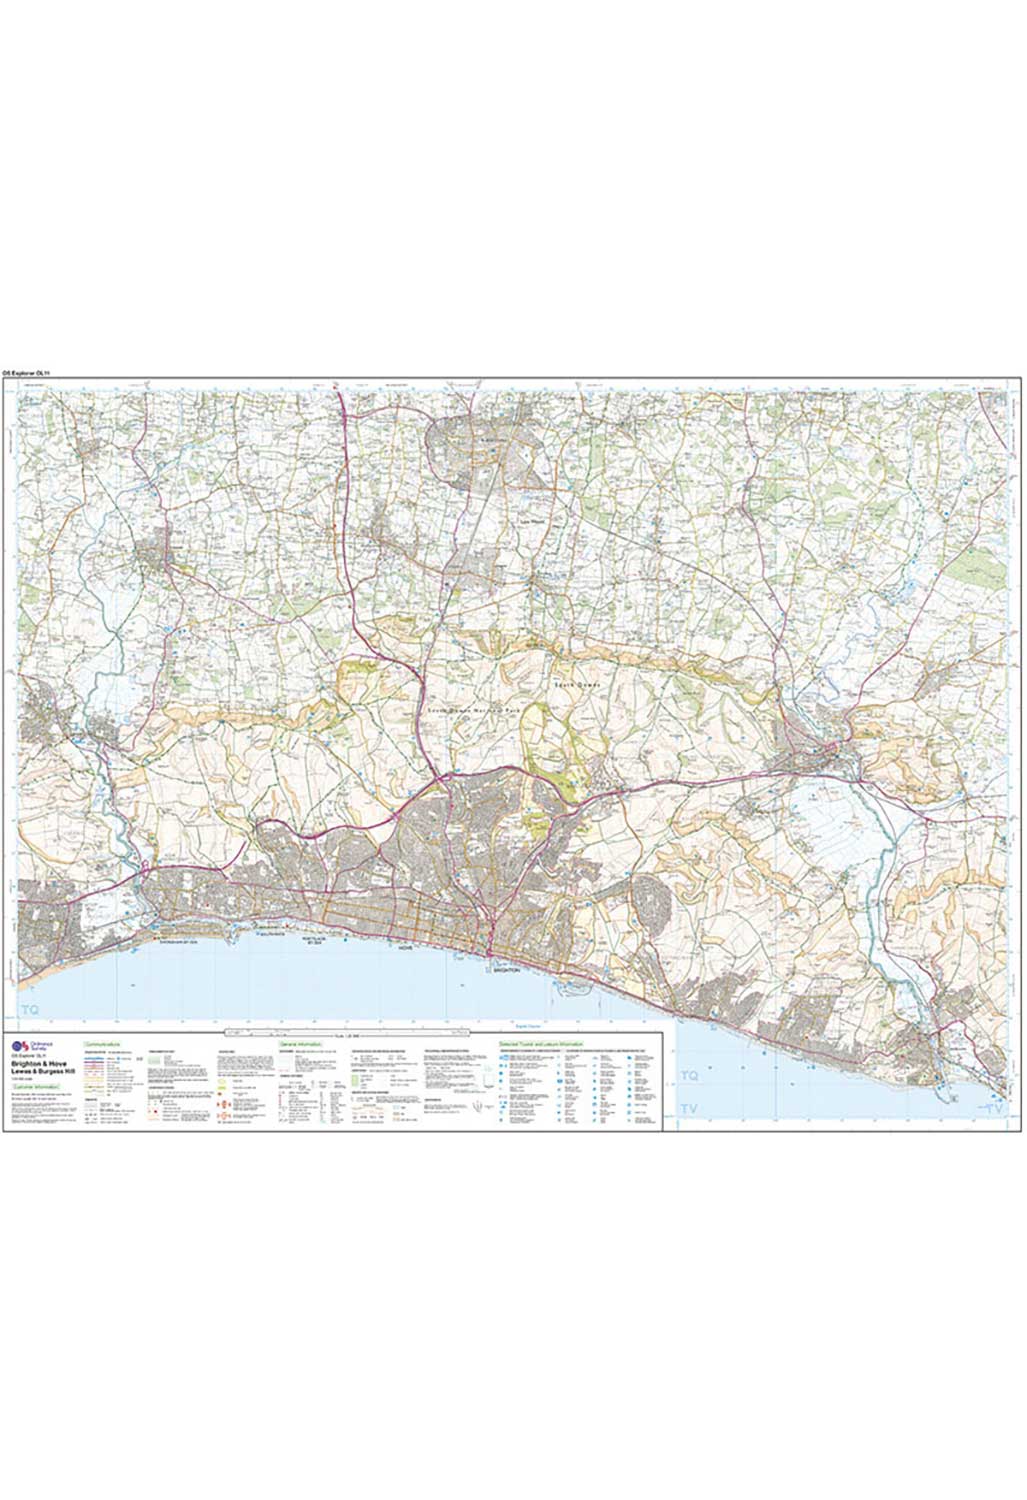 Ordnance Survey Brighton & Hove - OS Explorer OL11 Map